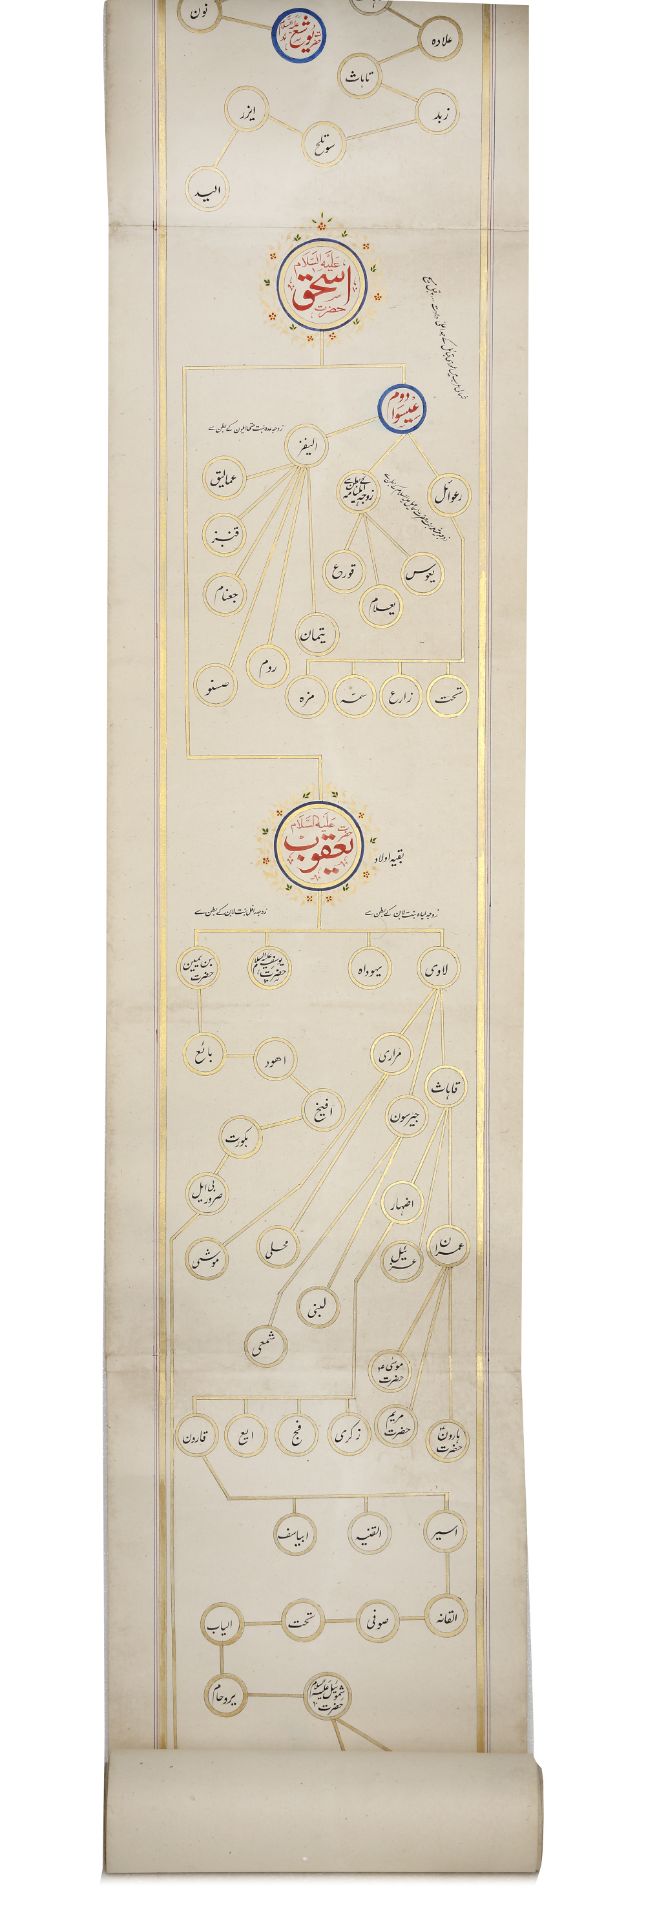 A LARGE OTTOMAN GENEALOGICAL SCROLL (SILSILENAME), TURKEY, 18TH CENTURY - Image 5 of 9